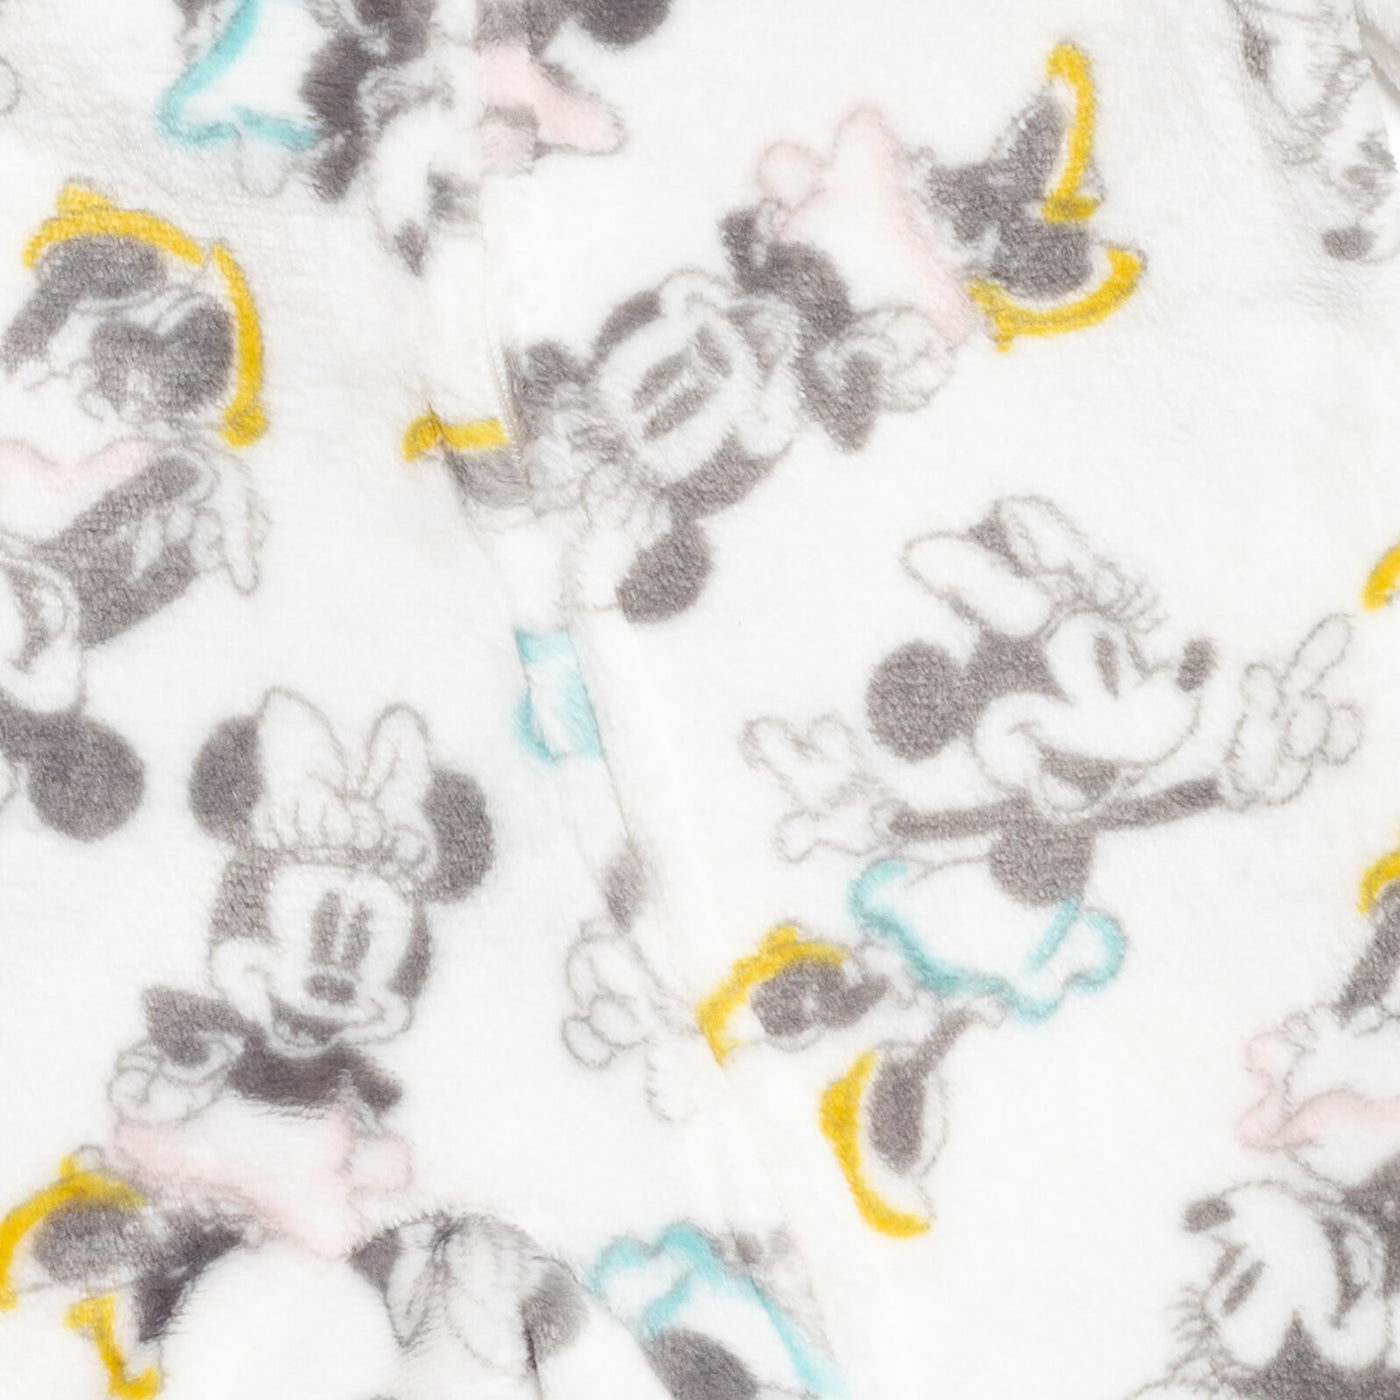 Minnie Mouse Mickey Mouse paquete de 2 overoles con cremallera